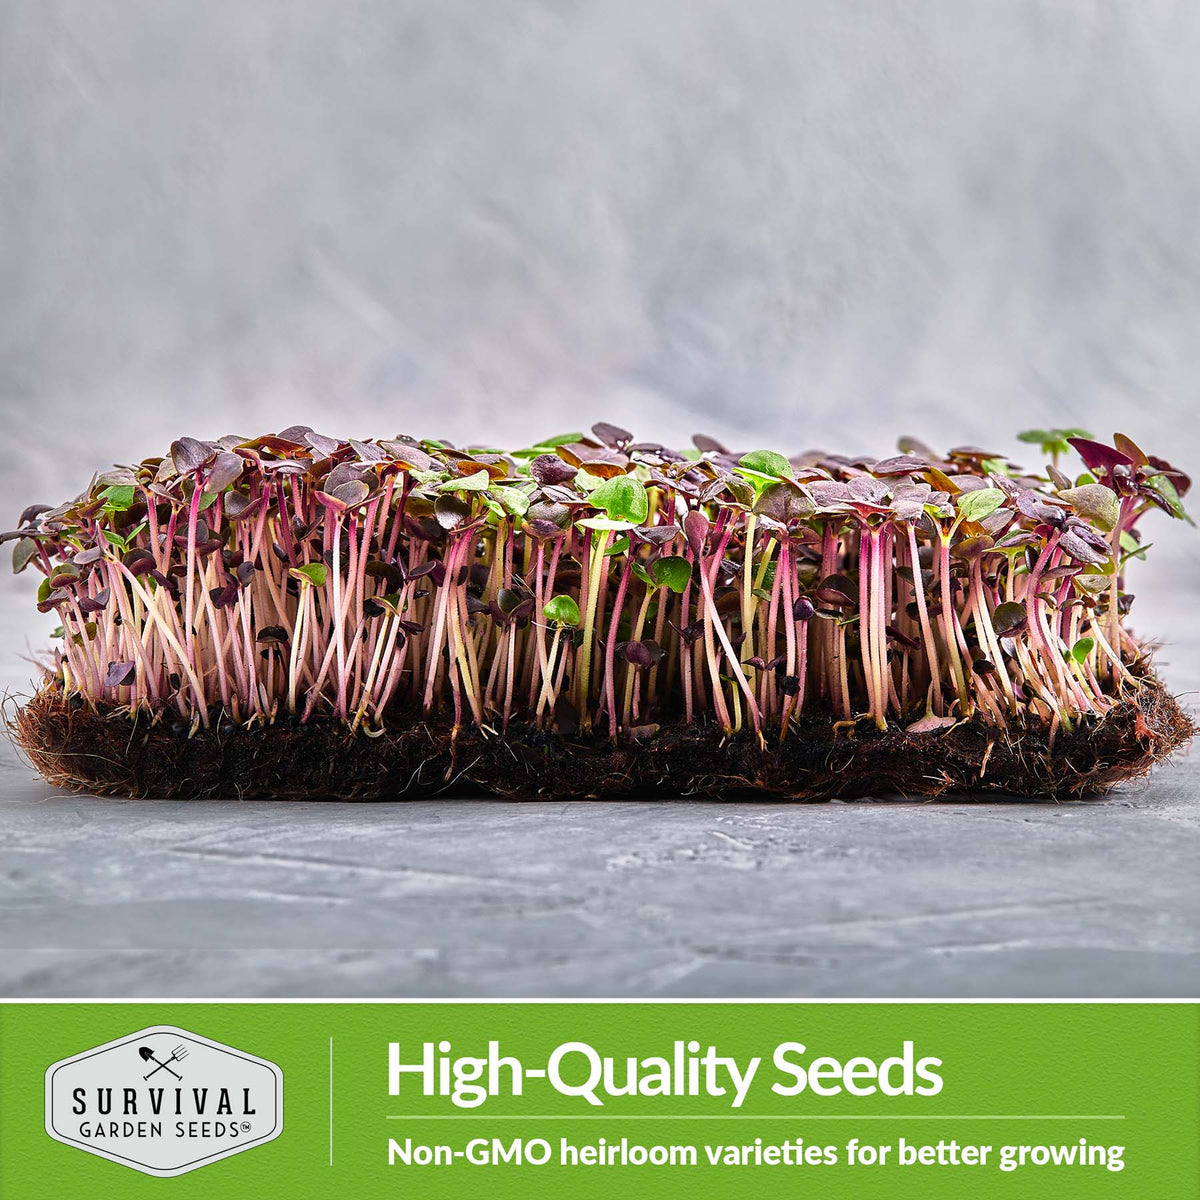 Opal Basil Microgreens are non-GMO high quality seeds